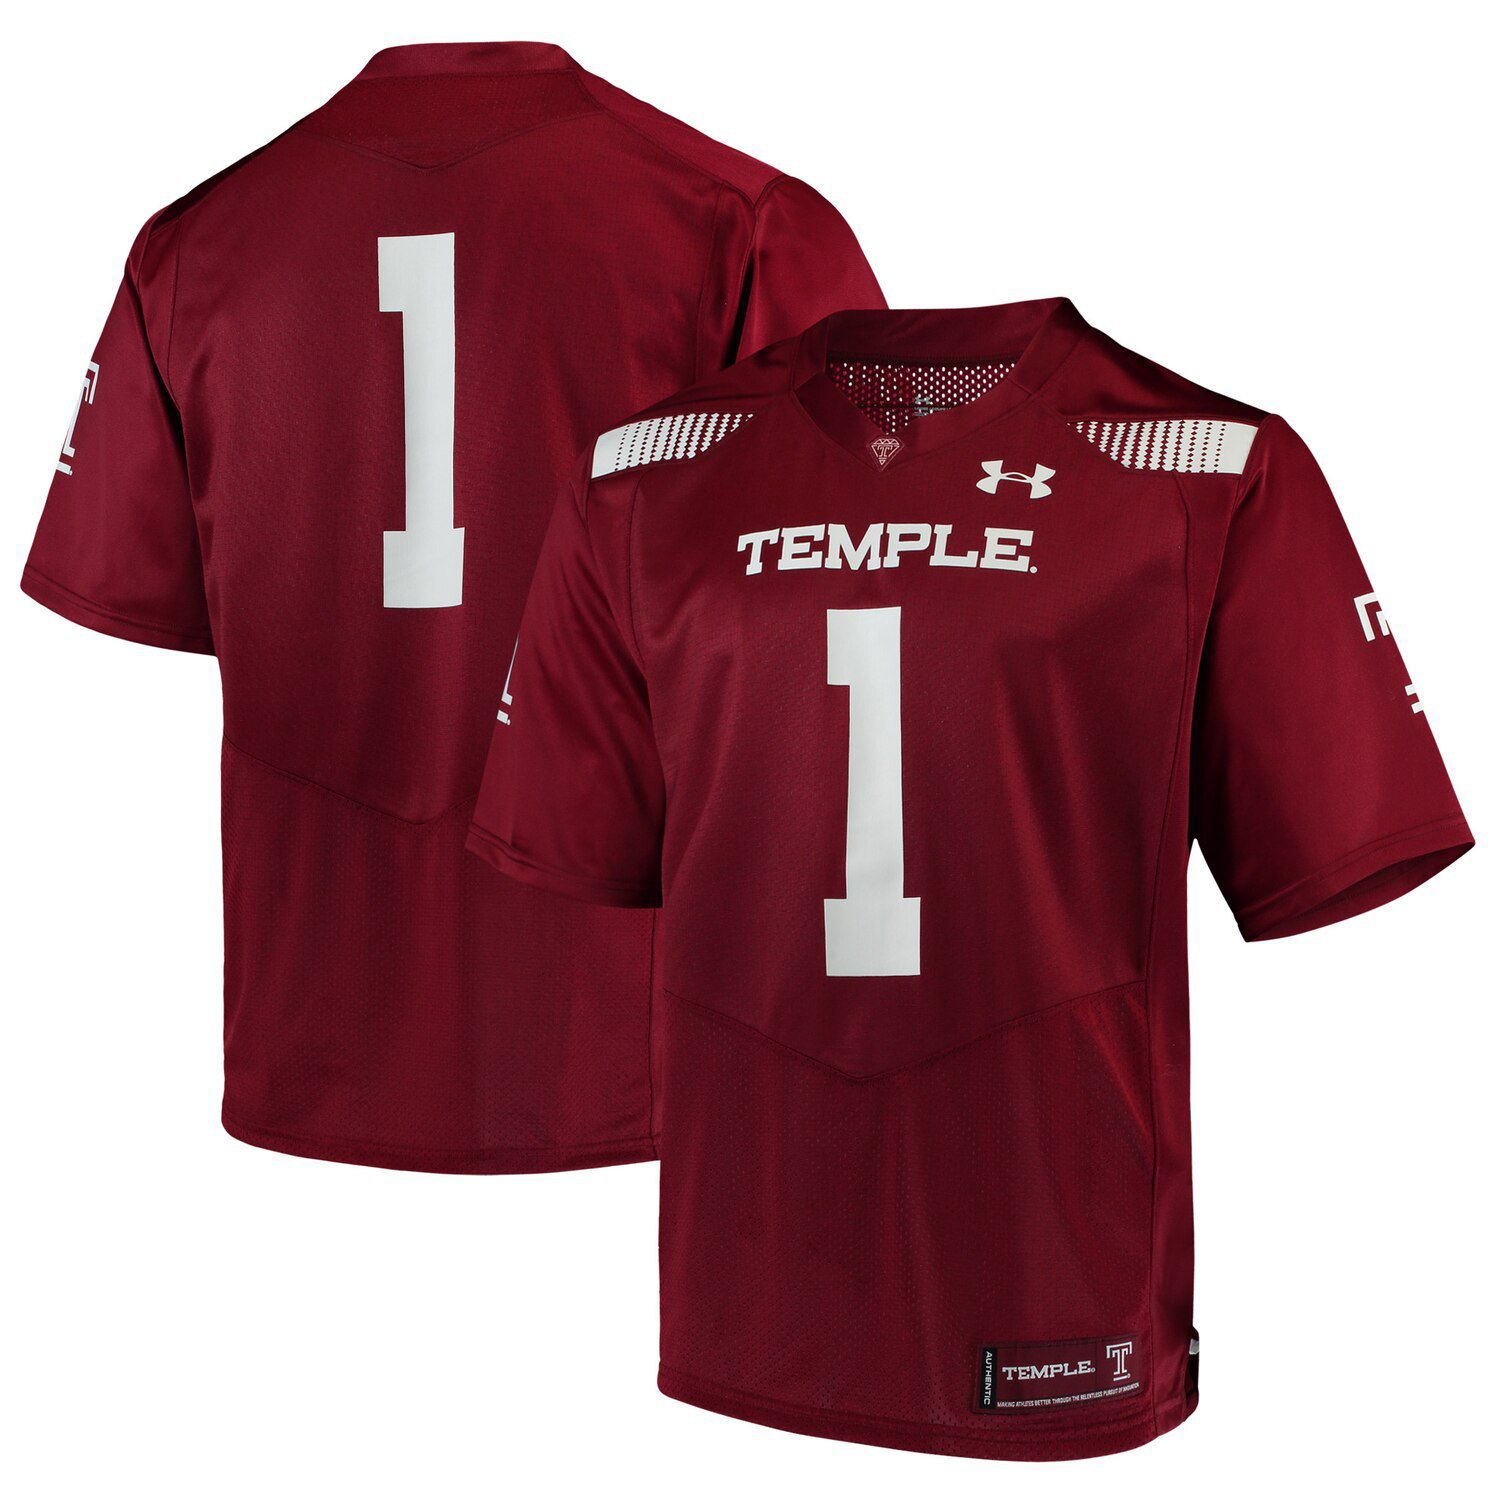 temple football jersey